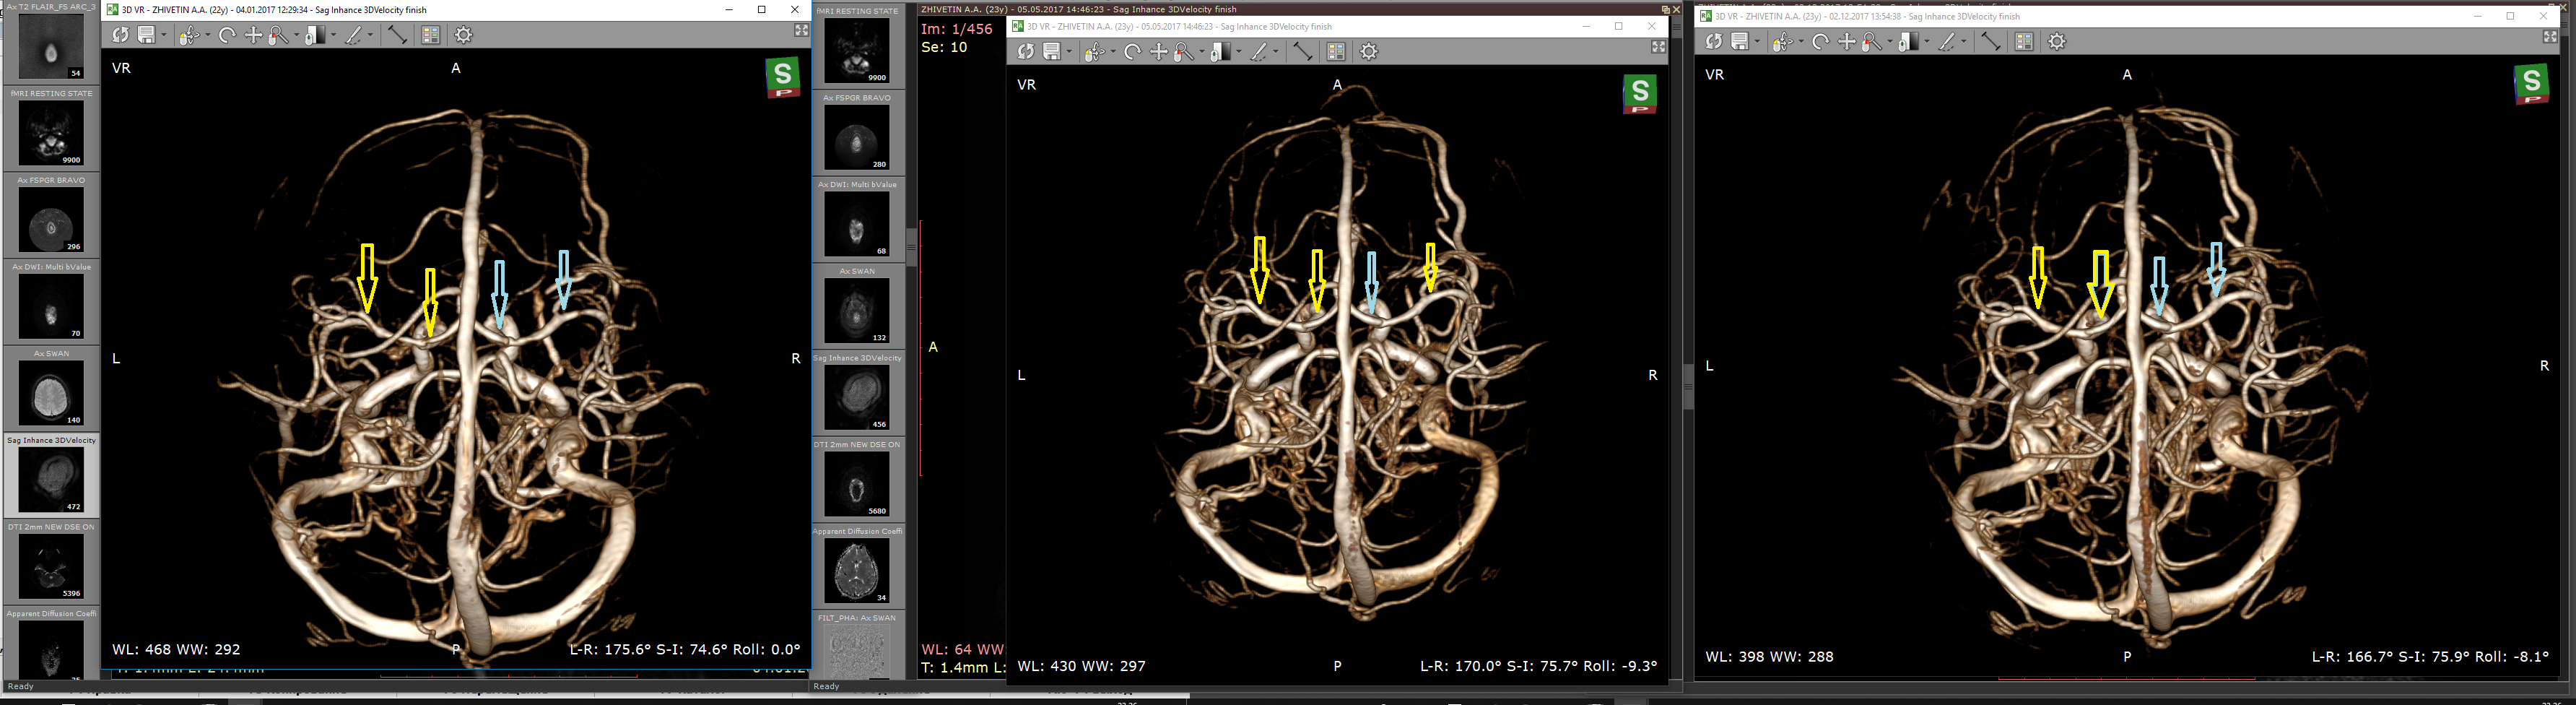 Динамическая картина MRT пациента с шизофренией